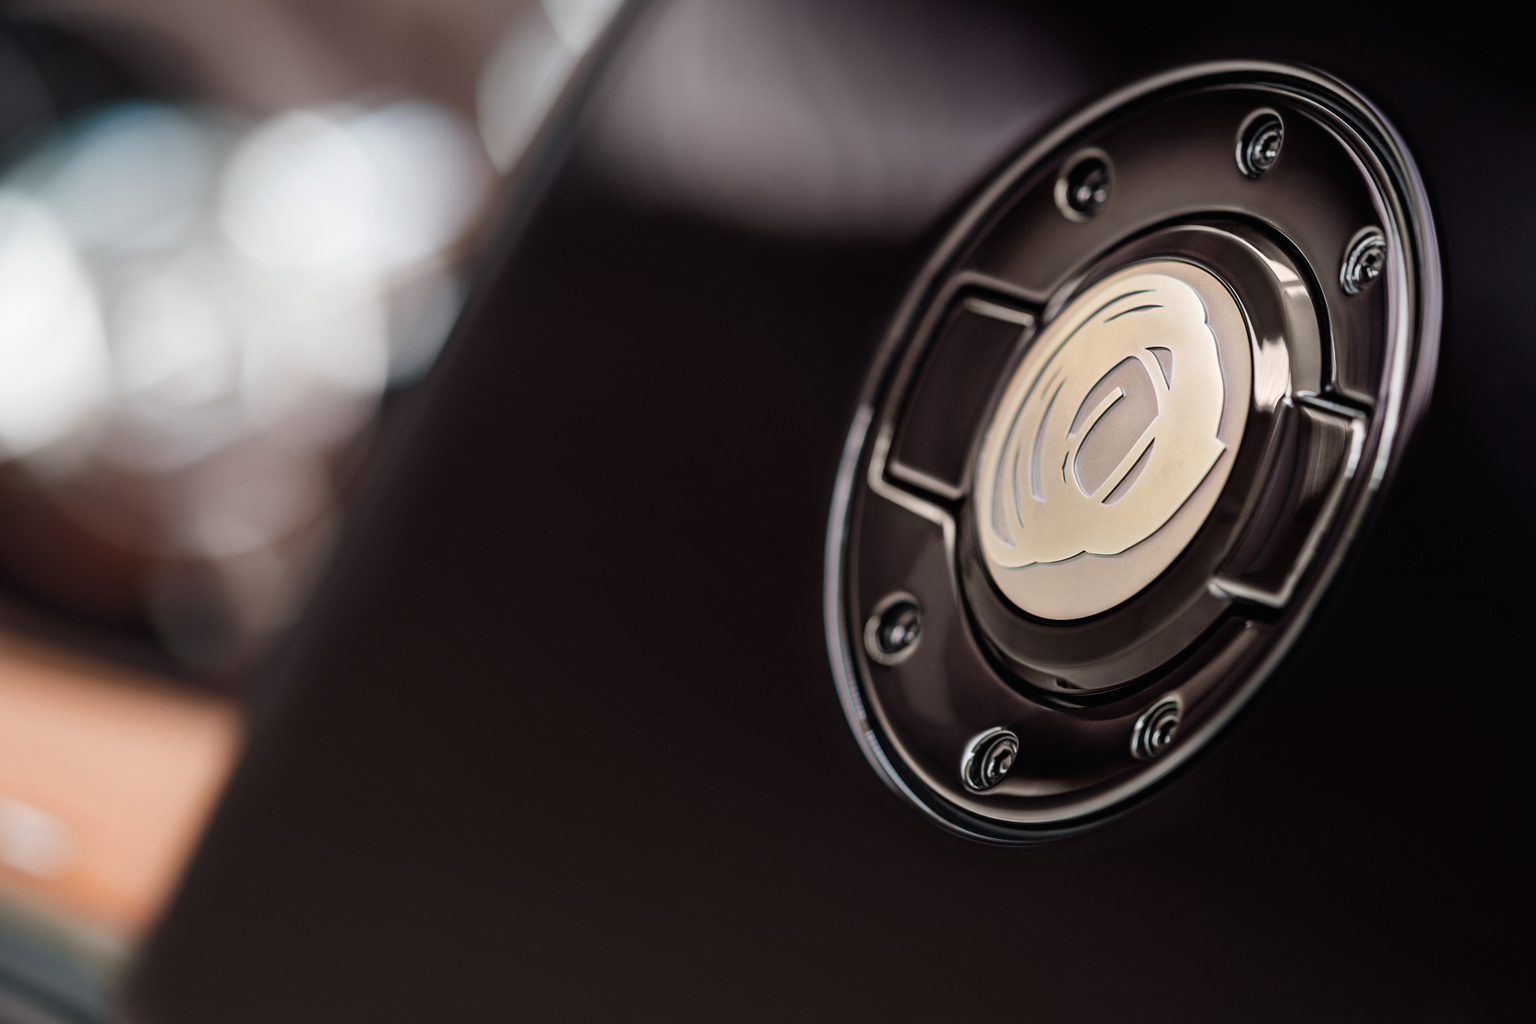 2012 Bugatti 16/4 Veyron Venet